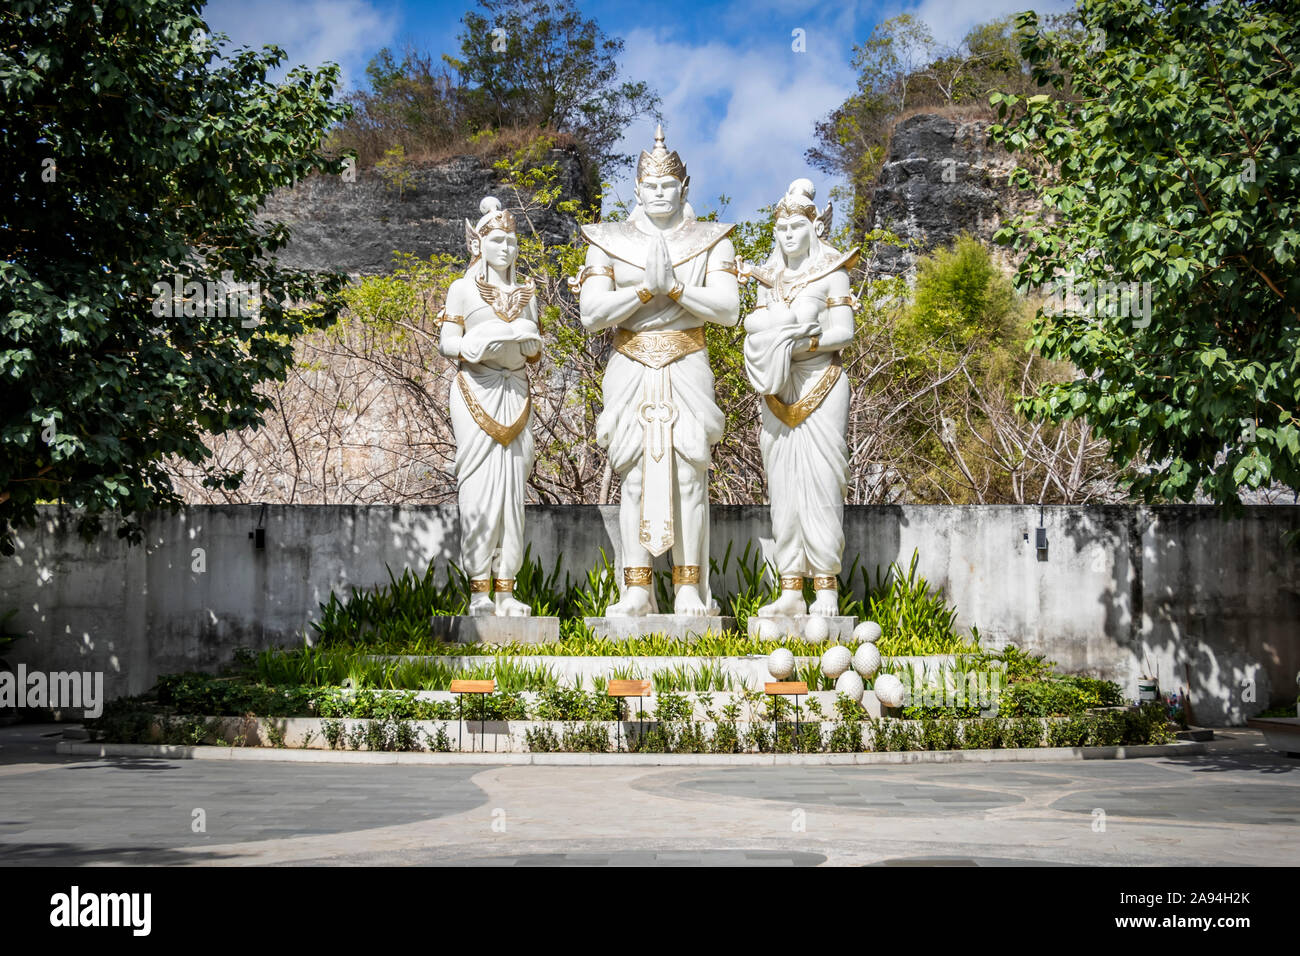 Vishnu statues at Garuda Wisnu Kencana Cultural Park; Bali, Indonesia Stock Photo